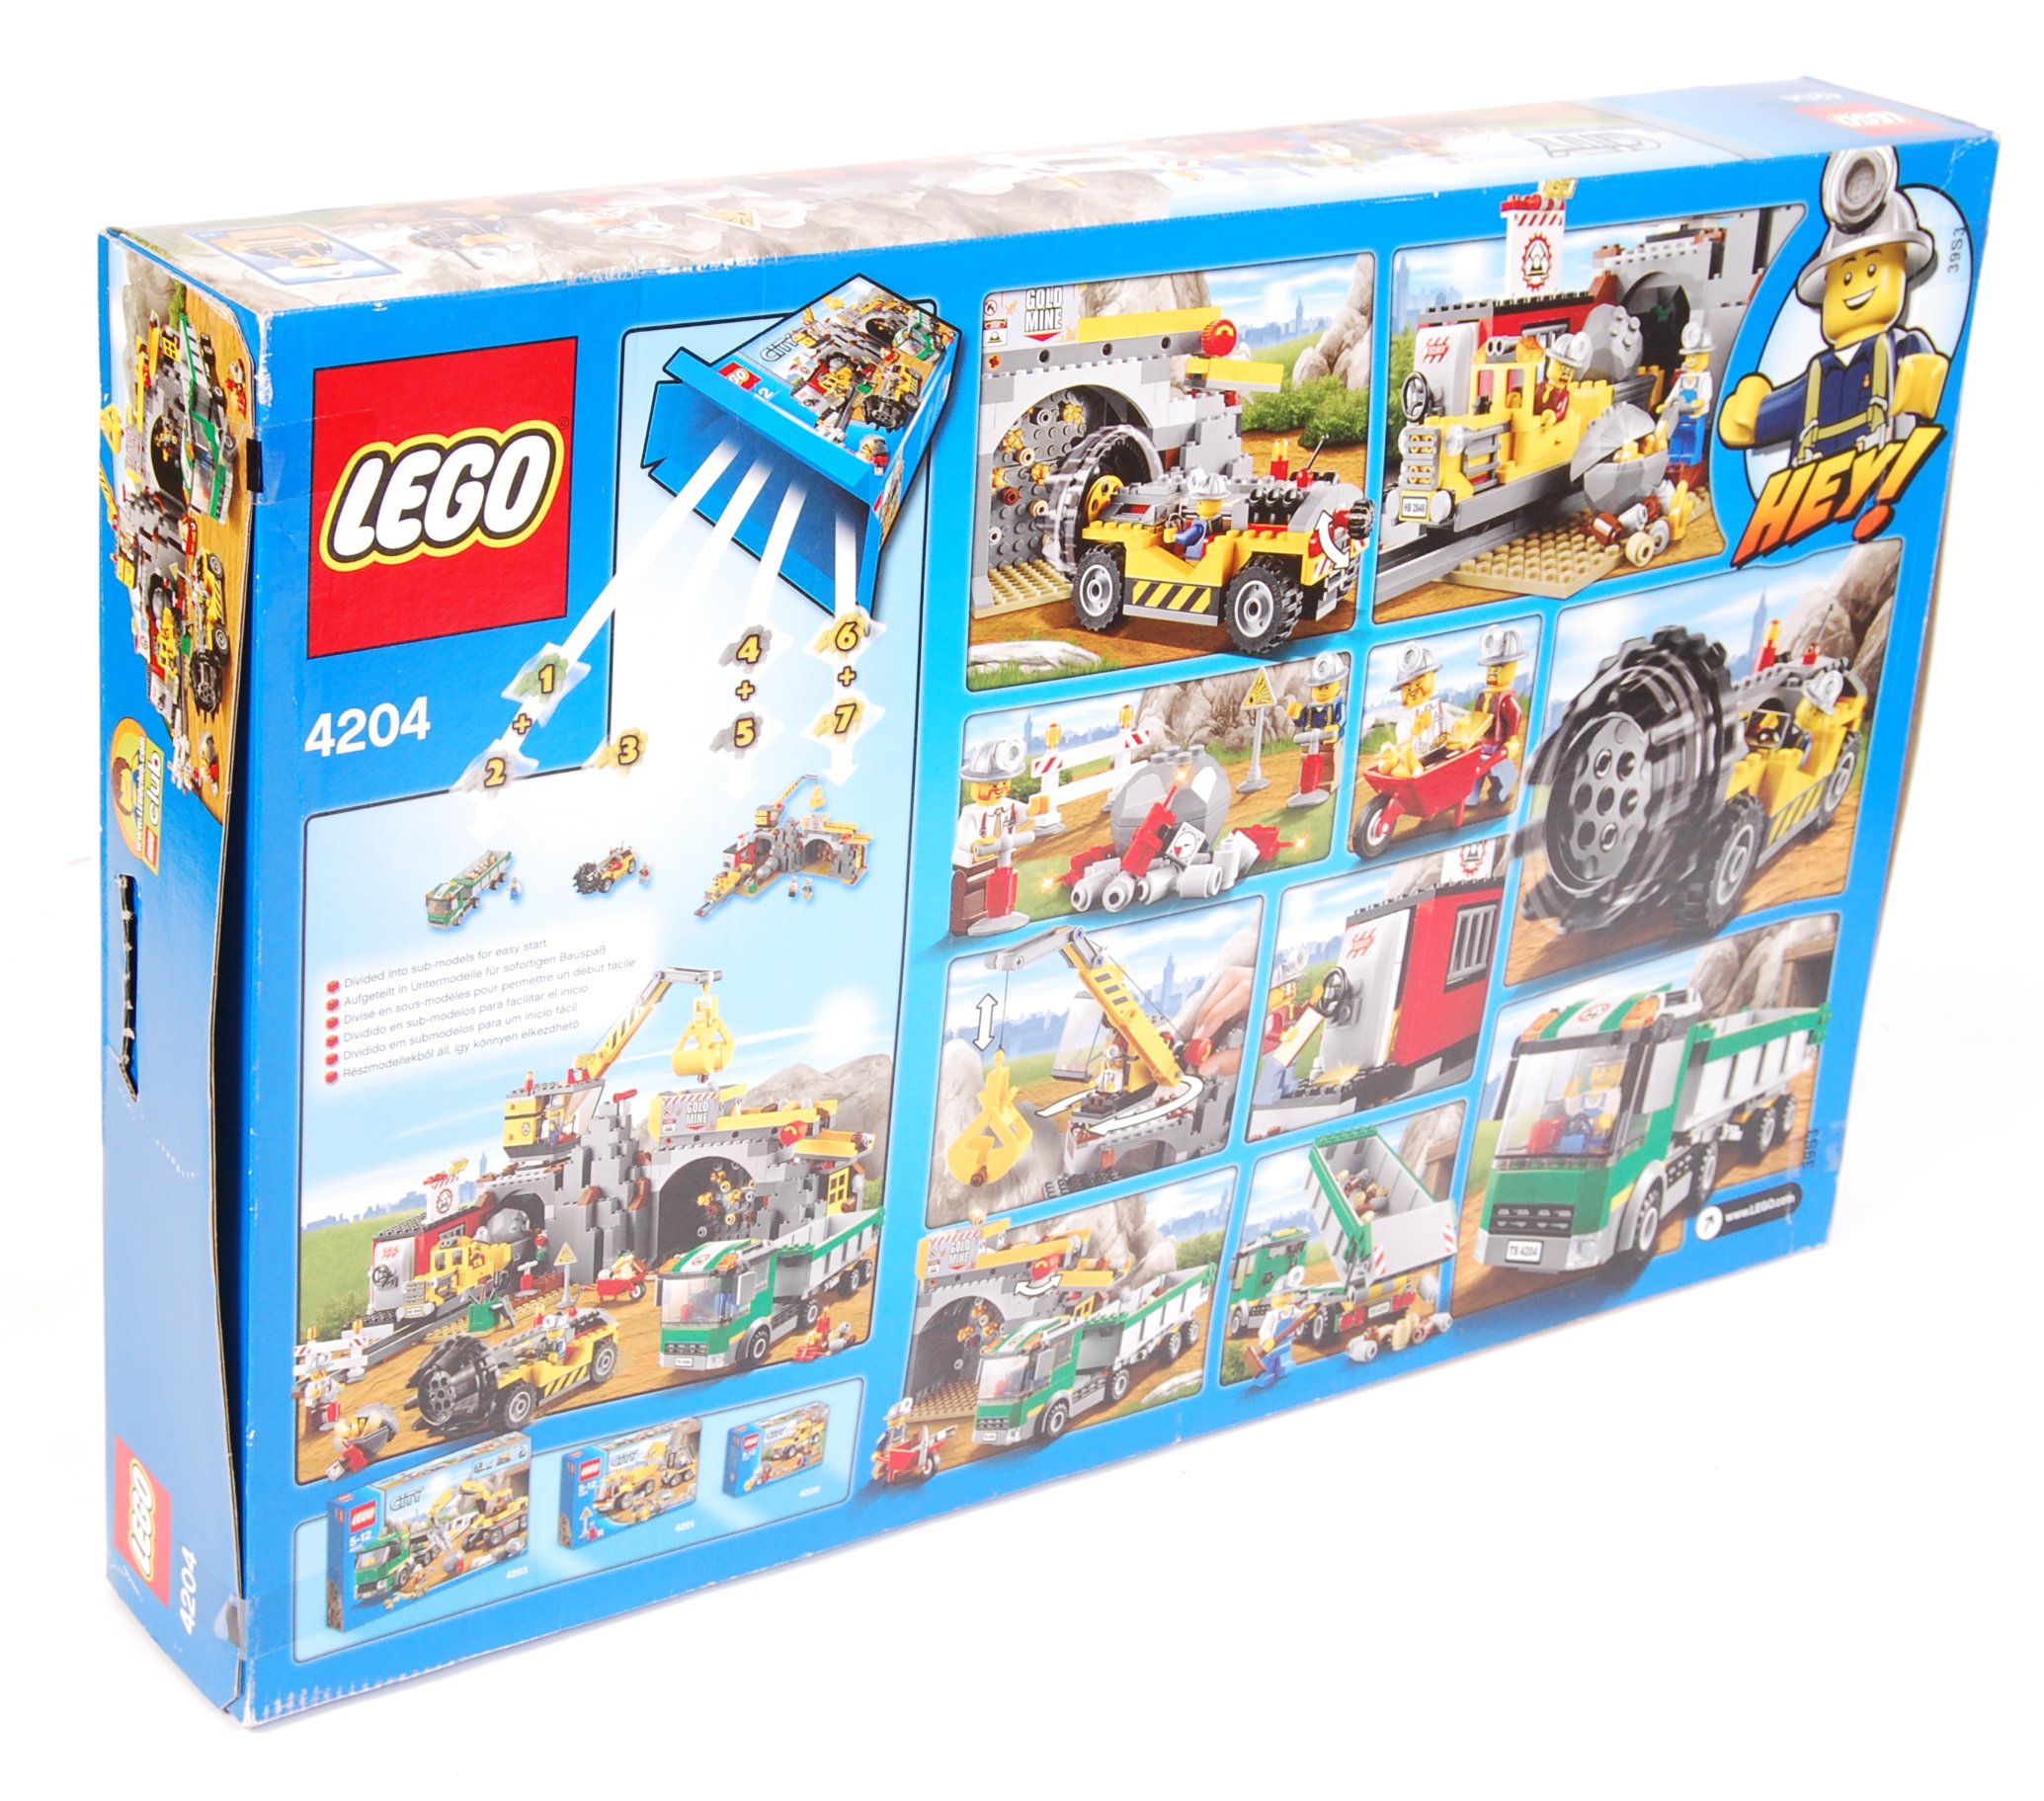 LEGO CITY SEALED SET 4204 ' THE MINE ' - AS NEW - Image 2 of 3